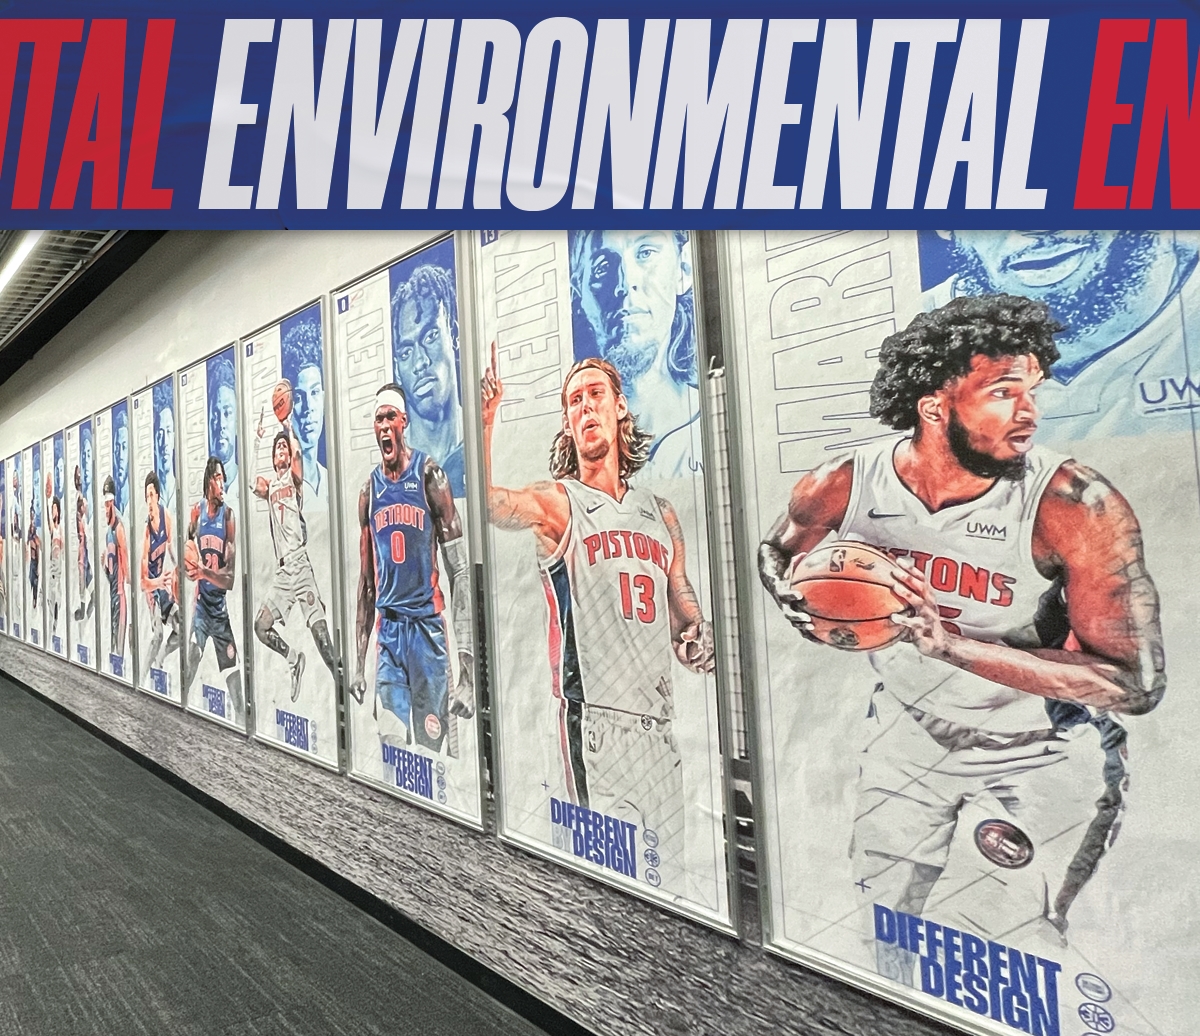 NBA's Detroit Pistons 20222-23 season campaign environmental graphics by Creative Director Justin Winget